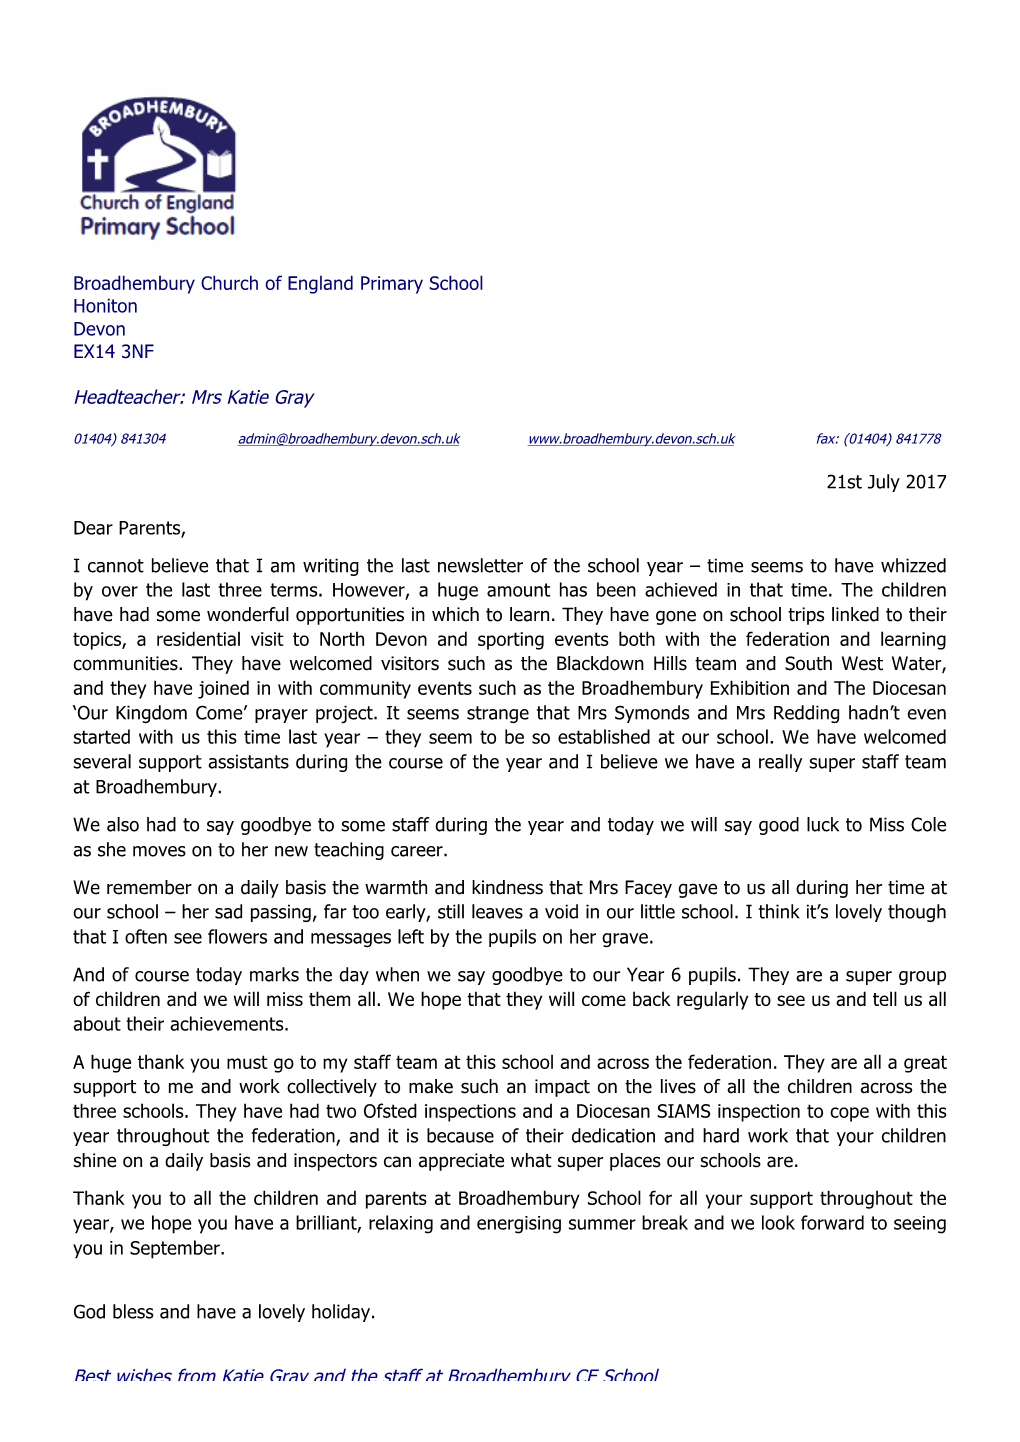 Broadhembury Church of England Primary School Honiton Devon EX14 3NF Headteacher: Mrs Katie Gray 21St July 2017 Dear Parents, I